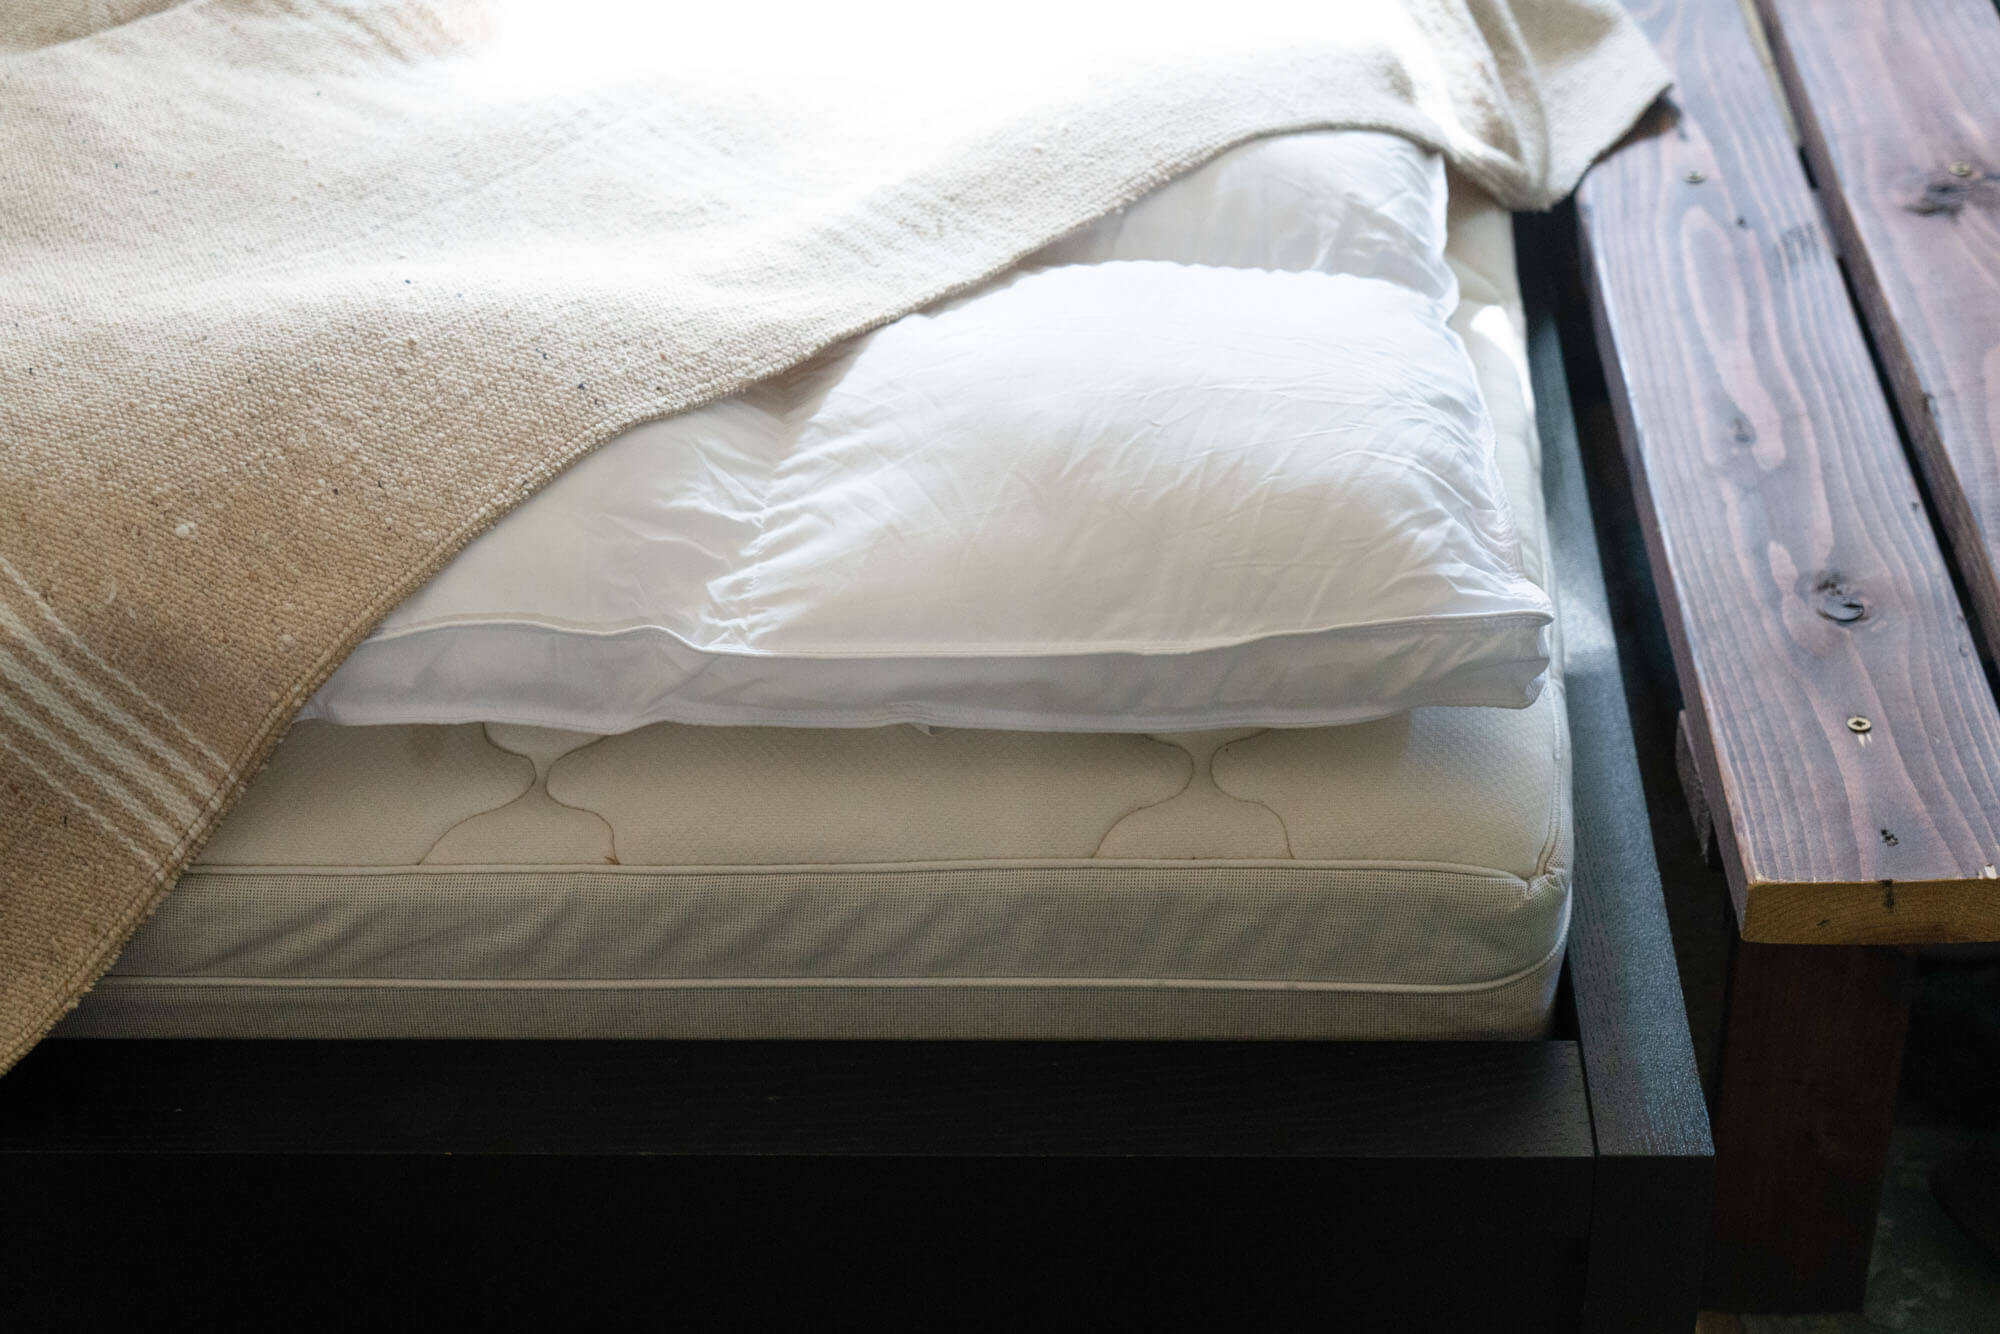 Cheer Collection mattress topper installed under bedspread